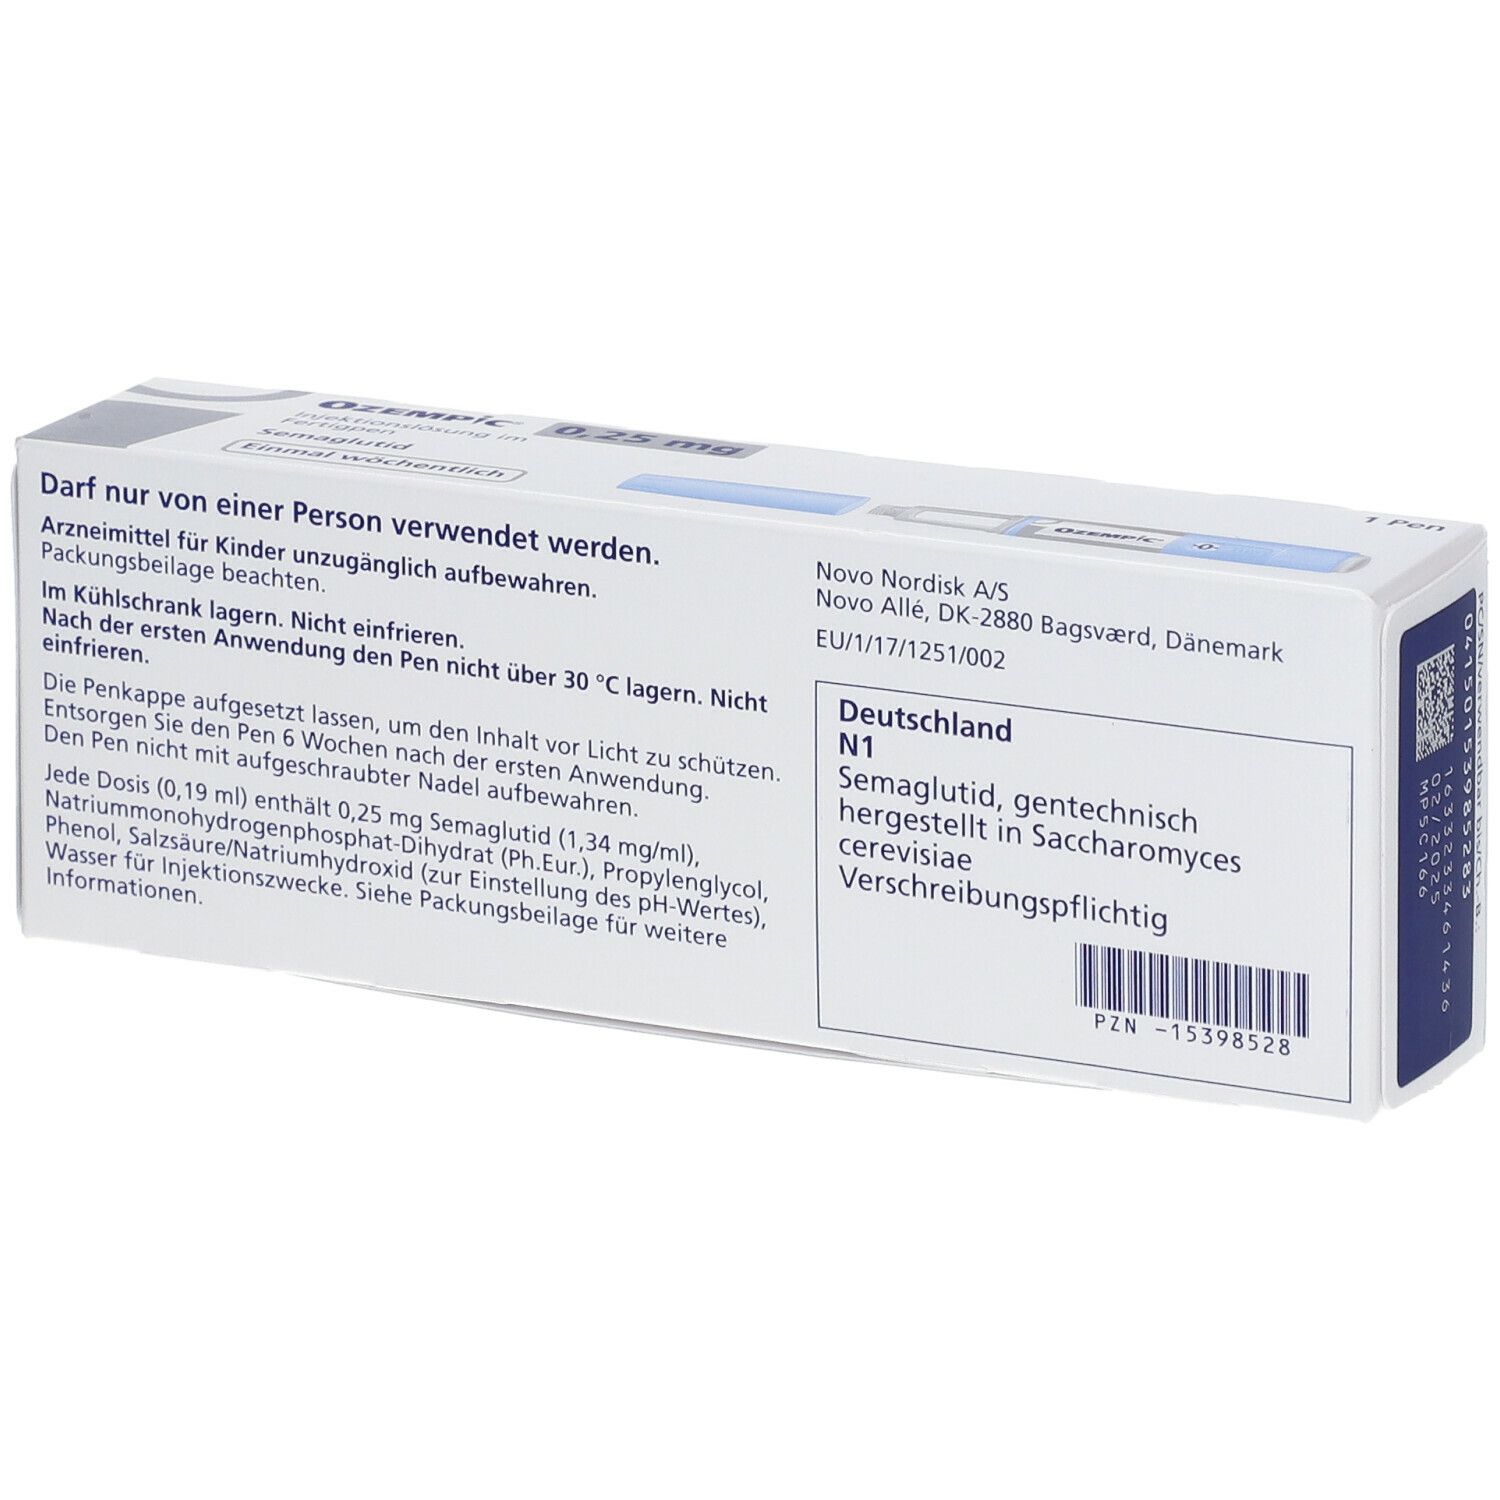 Ozempic® 0,25 mg